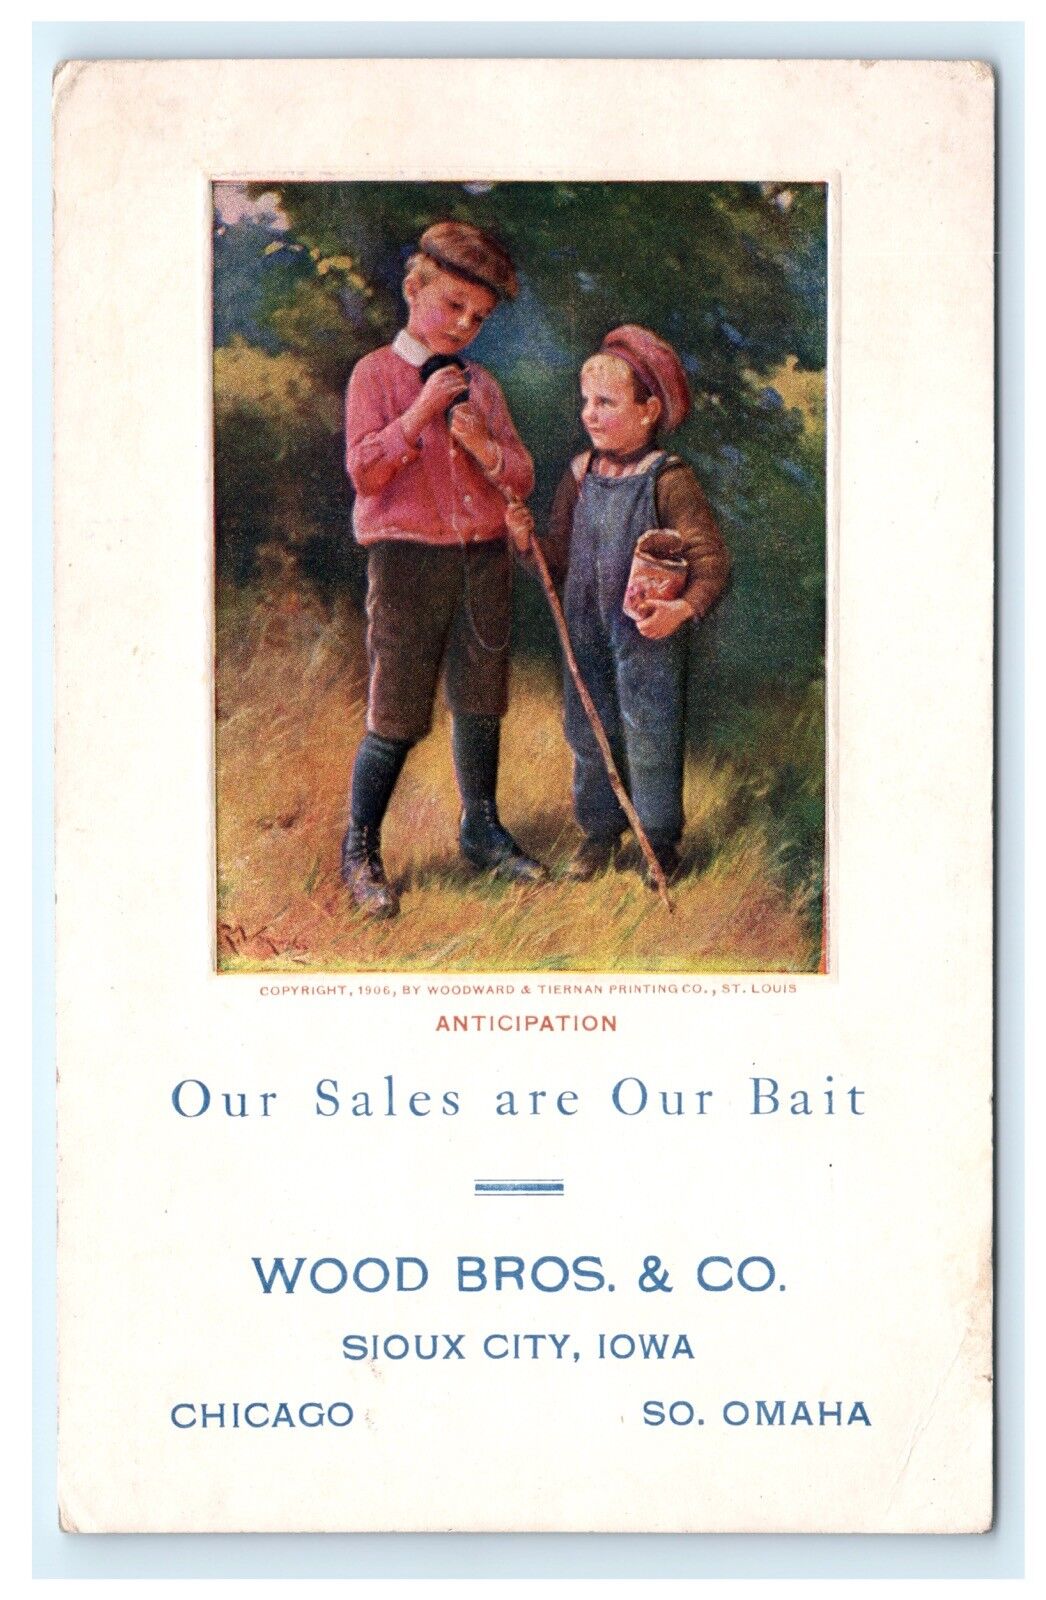 Wood Bros. & Co. Sioux City Iowa IA Embossed Advertising Postcard Fishing C10